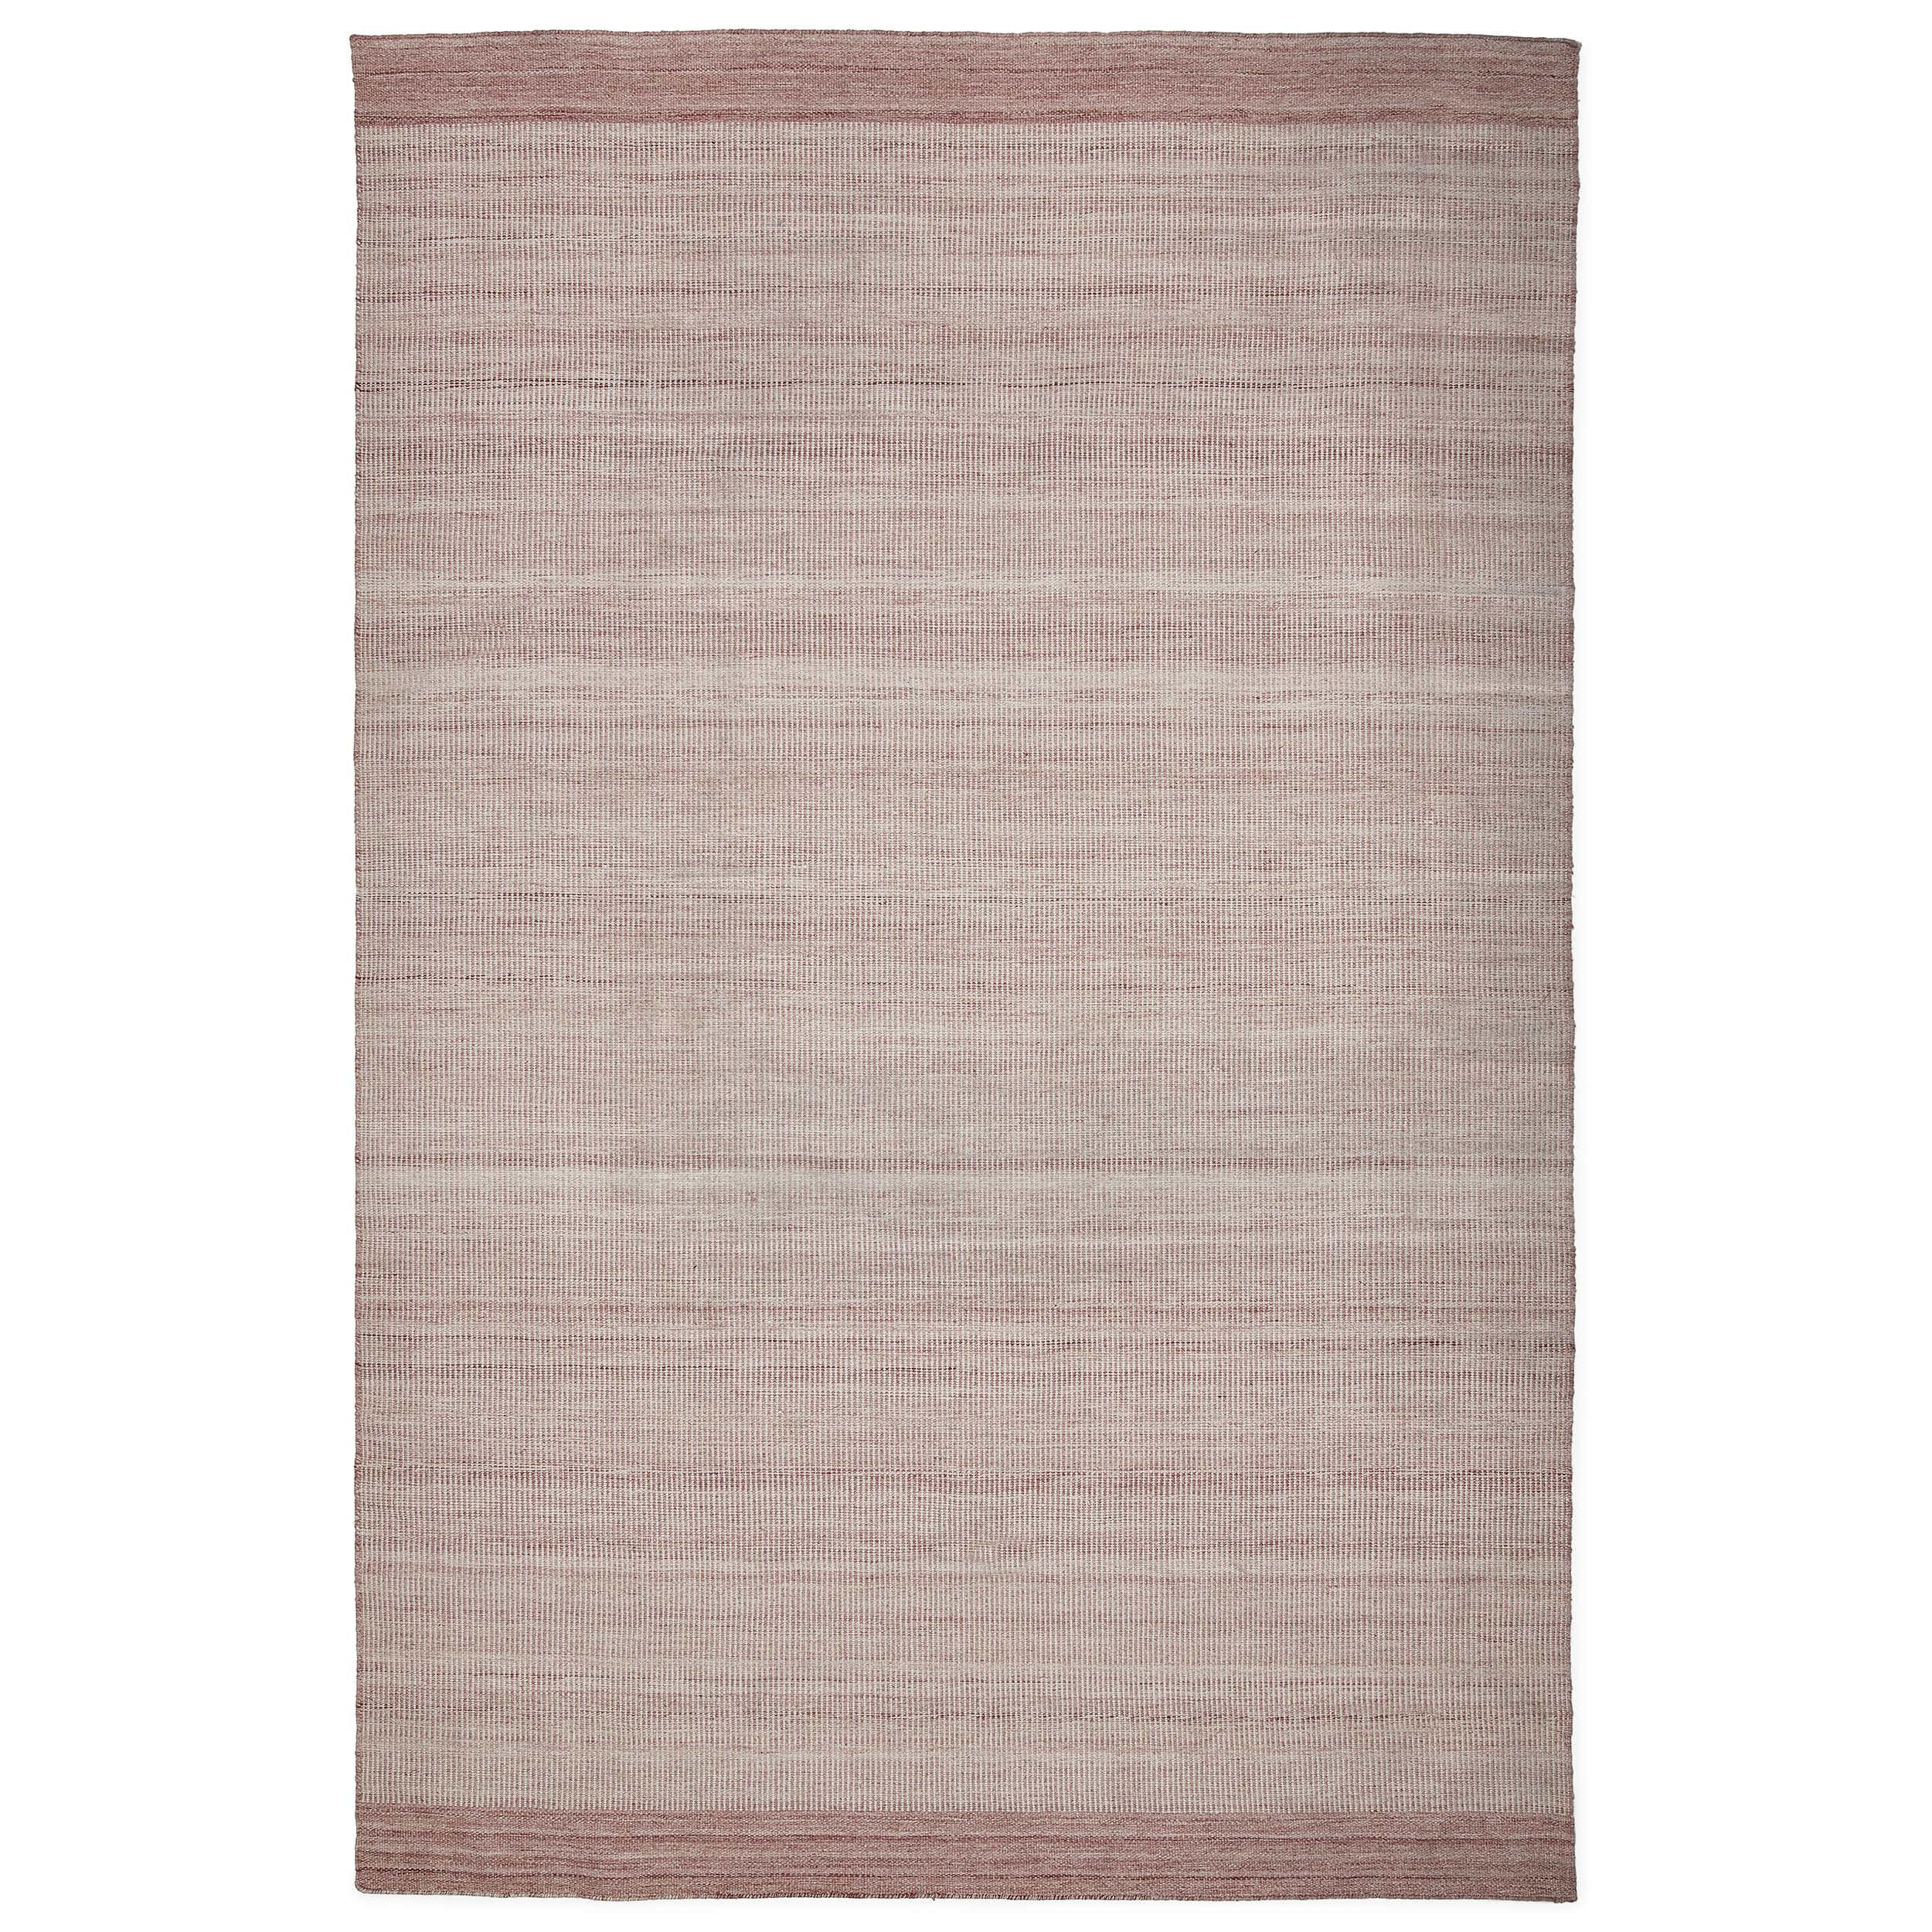 Veneto-rug-rectangular